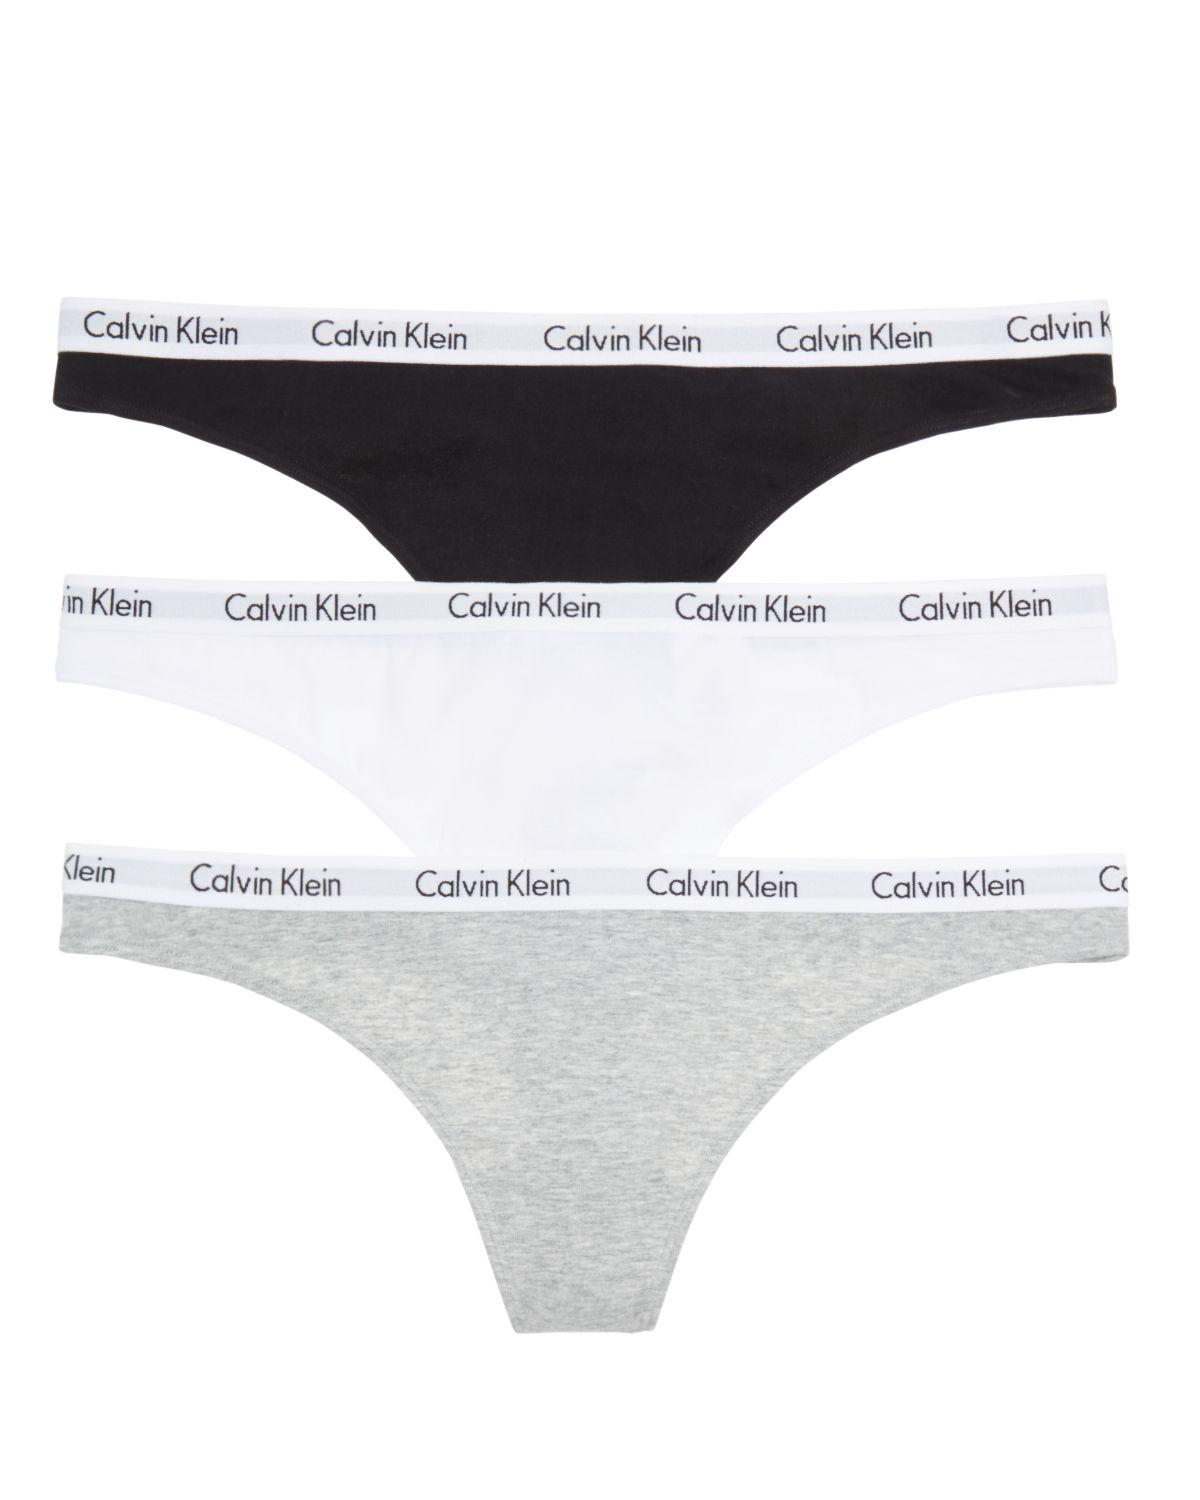 Calvin klein Carousel Thongs, Set Of 3 #qd3587 in Black | Lyst